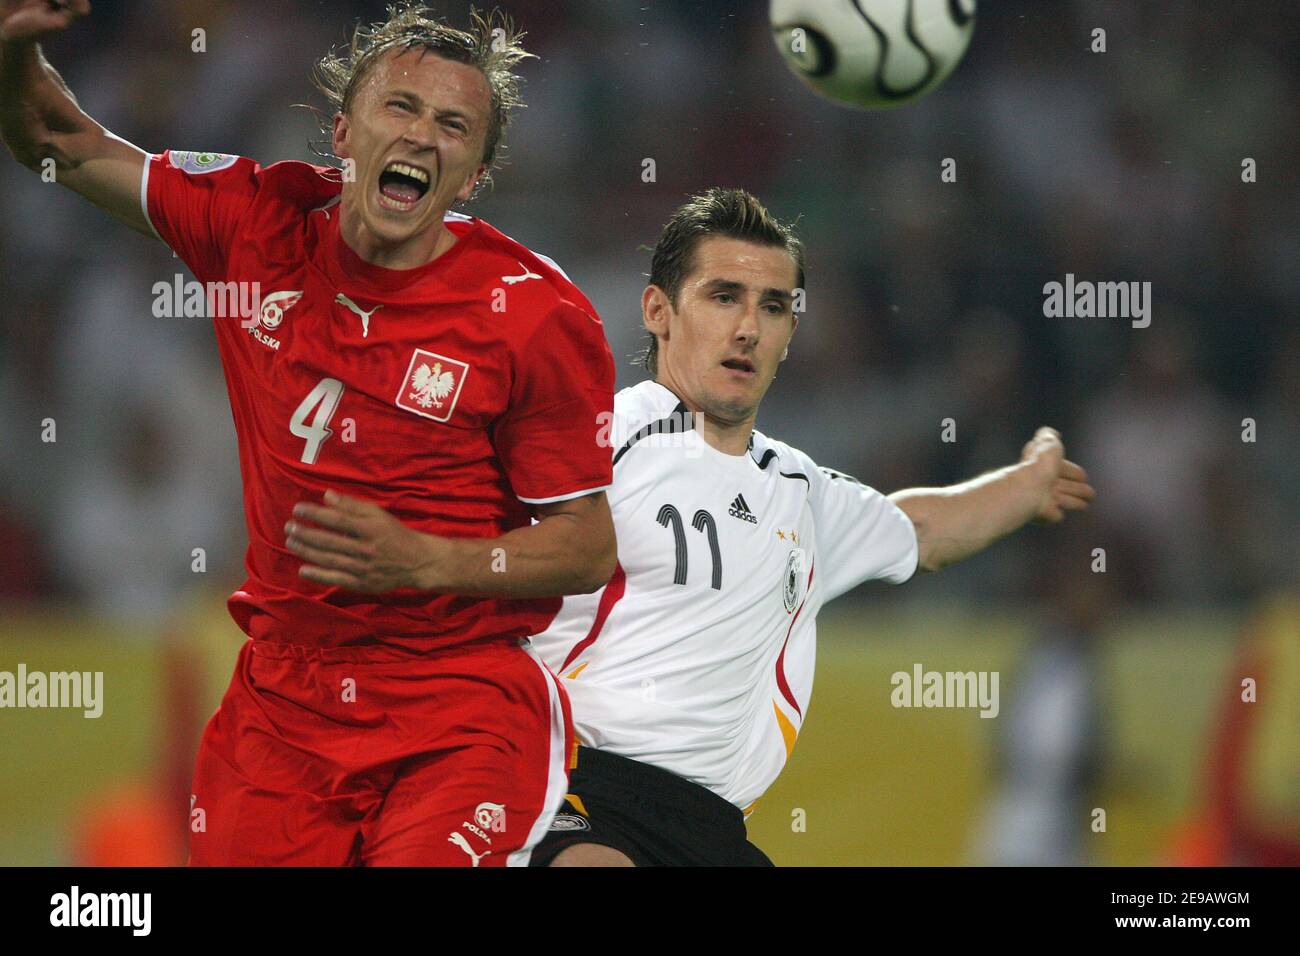 Germany's Miroslav Klose and Poland's Marcin Baszczynski during the World Cup 2006, Germany vs Poland at the Signal Iduna Park stadium in Dortmund, Germany on 14, 2006. Germany won 1-0. Photo by Gouhier-Hahn-Orban/Cameleon/ABACAPRESS.COM Stock Photo